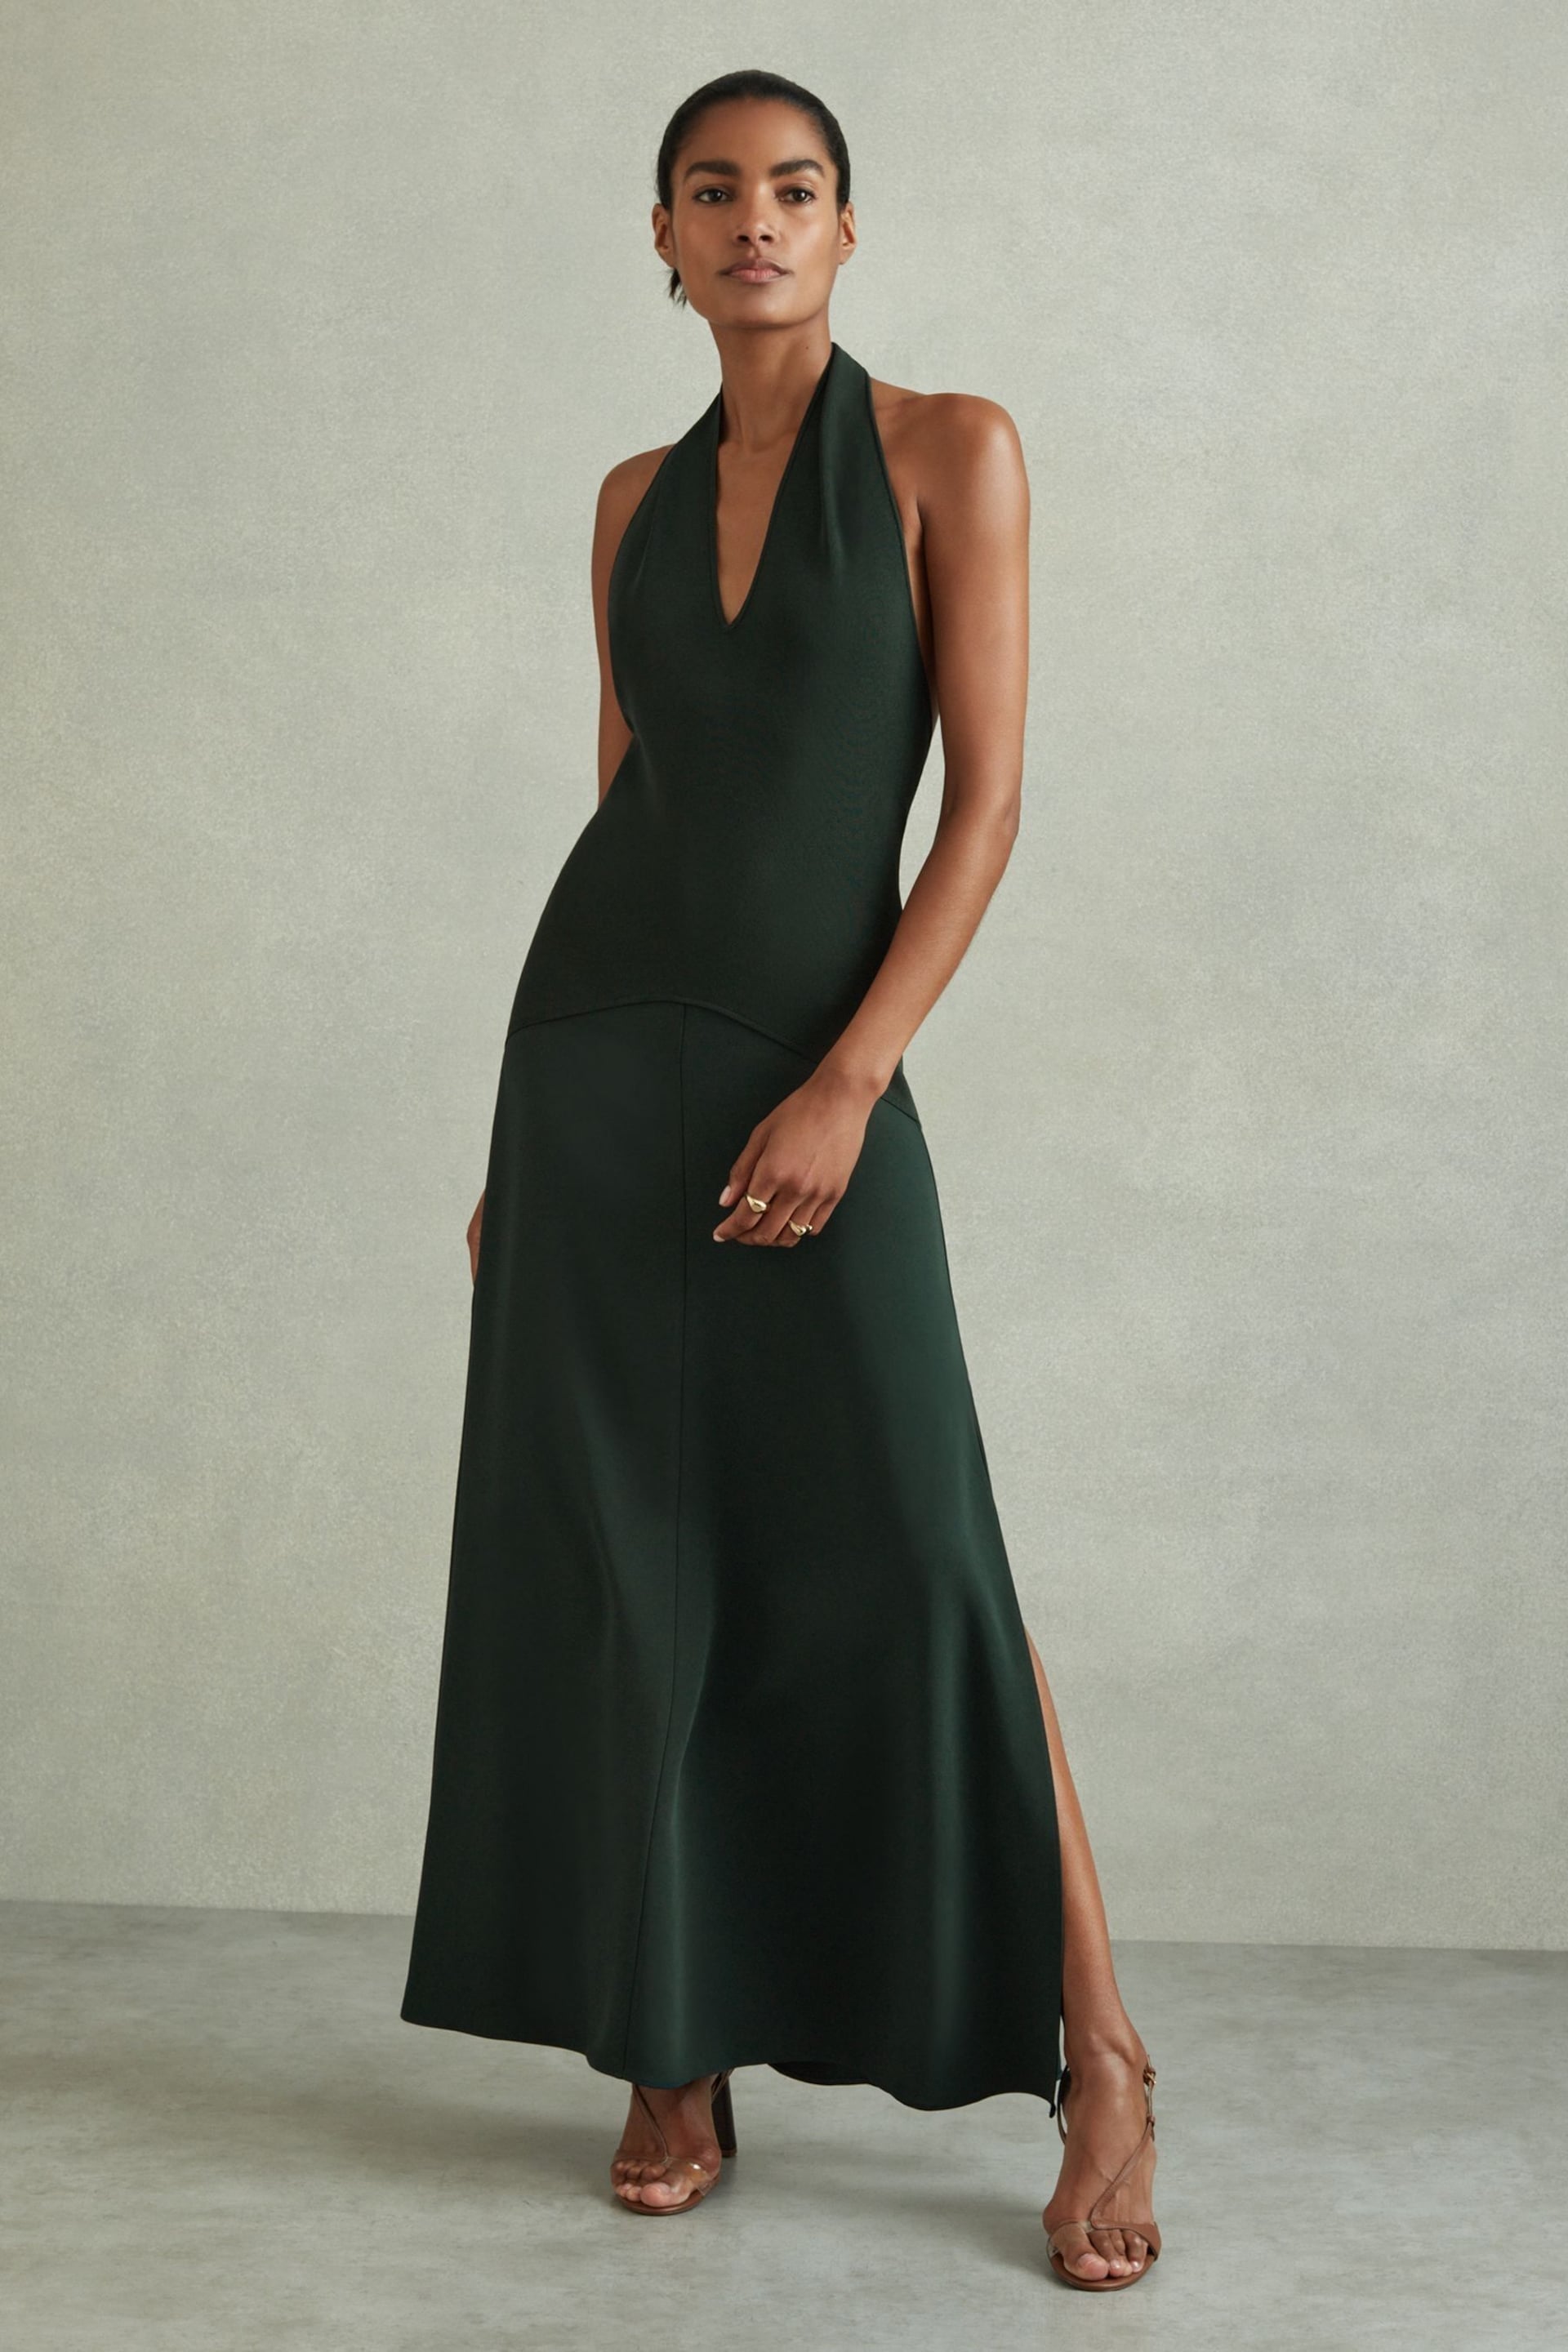 Reiss Green Rene Hybrid Knit Midi Dress - Image 1 of 5